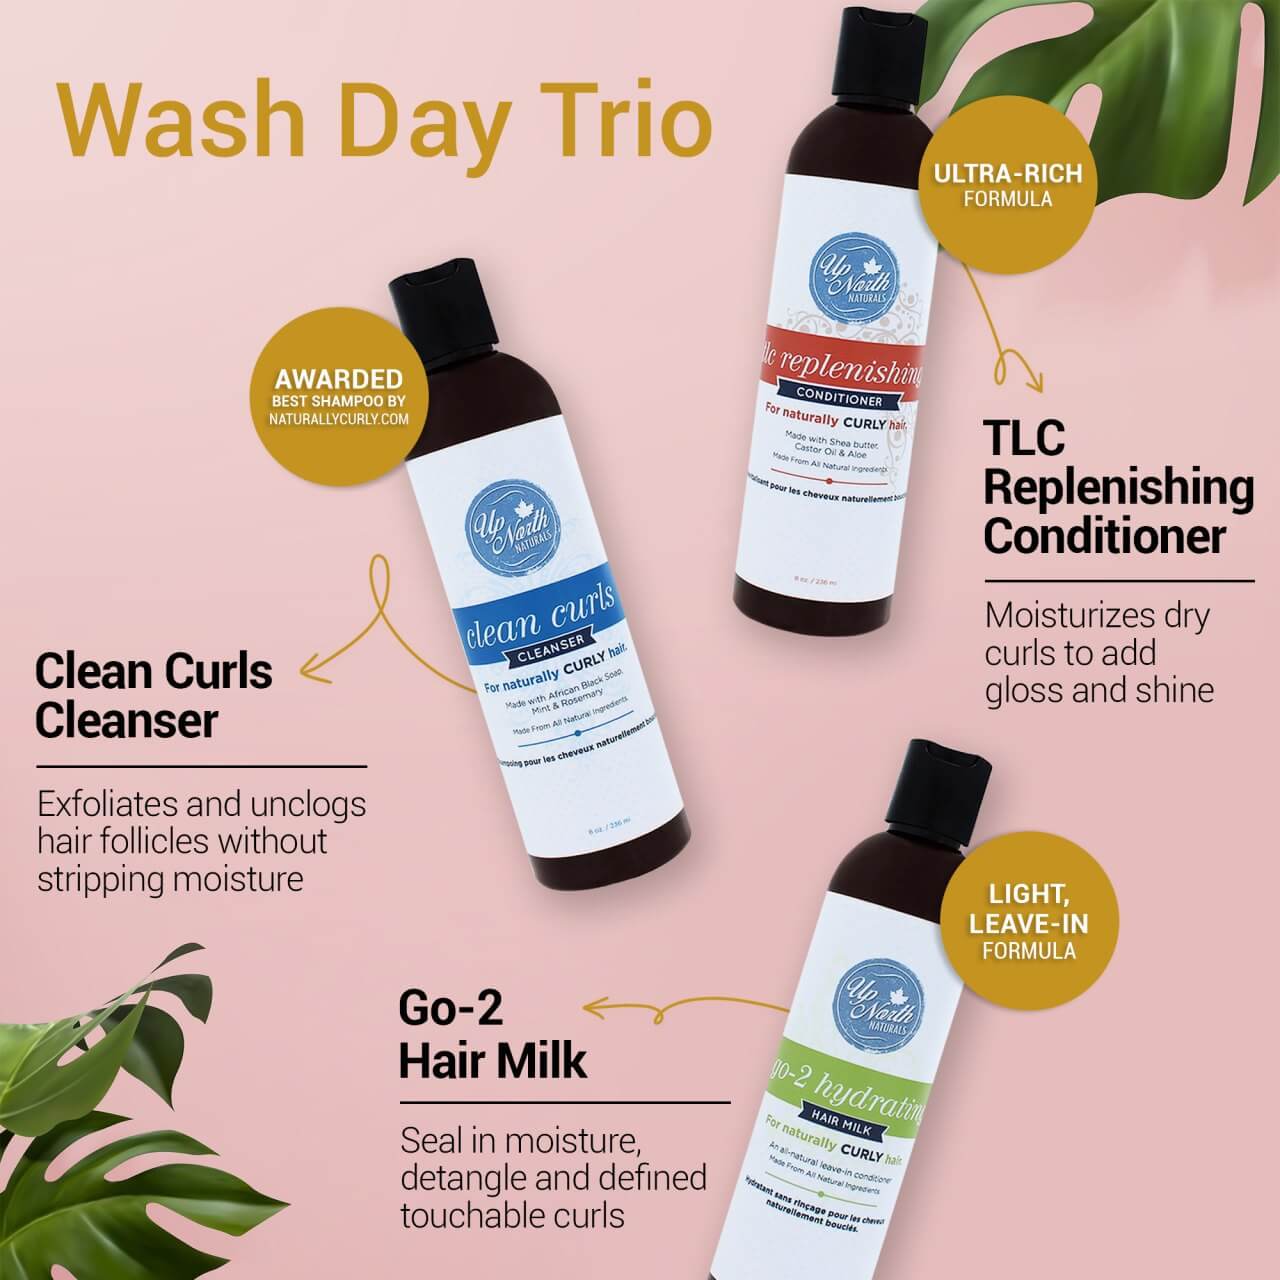 Wash Day Trio Infographic